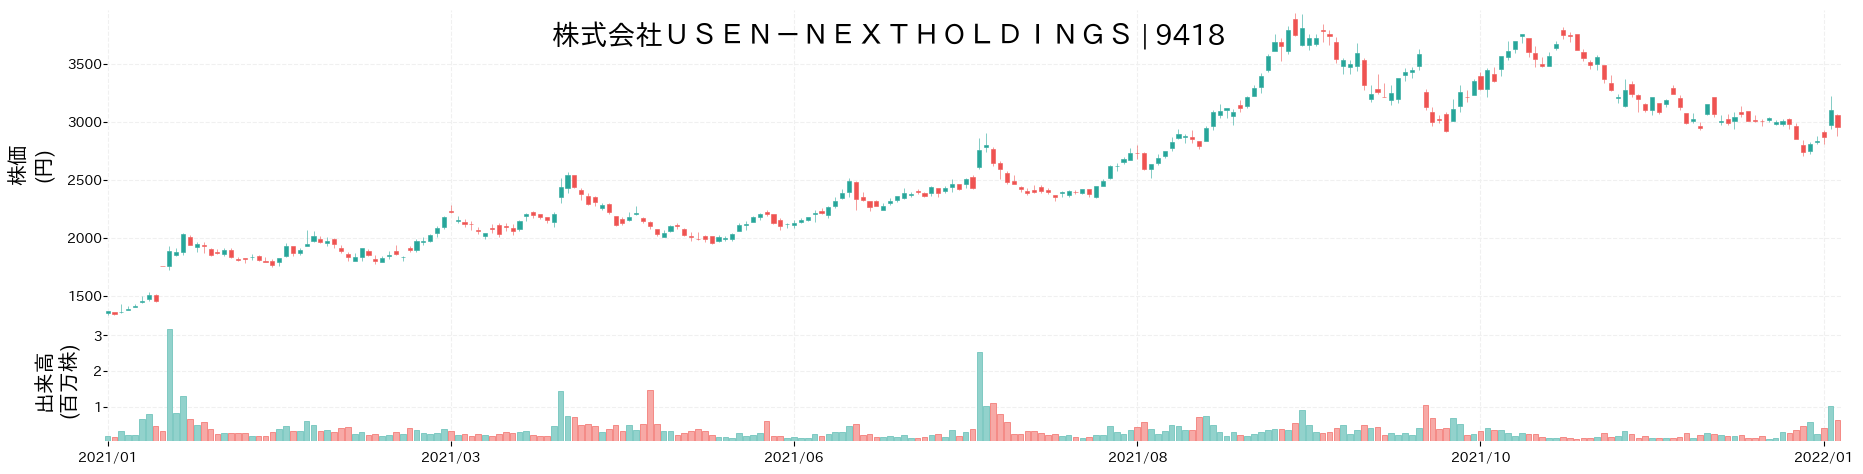 USEN-NEXT HOLDINGSの株価推移(2021)